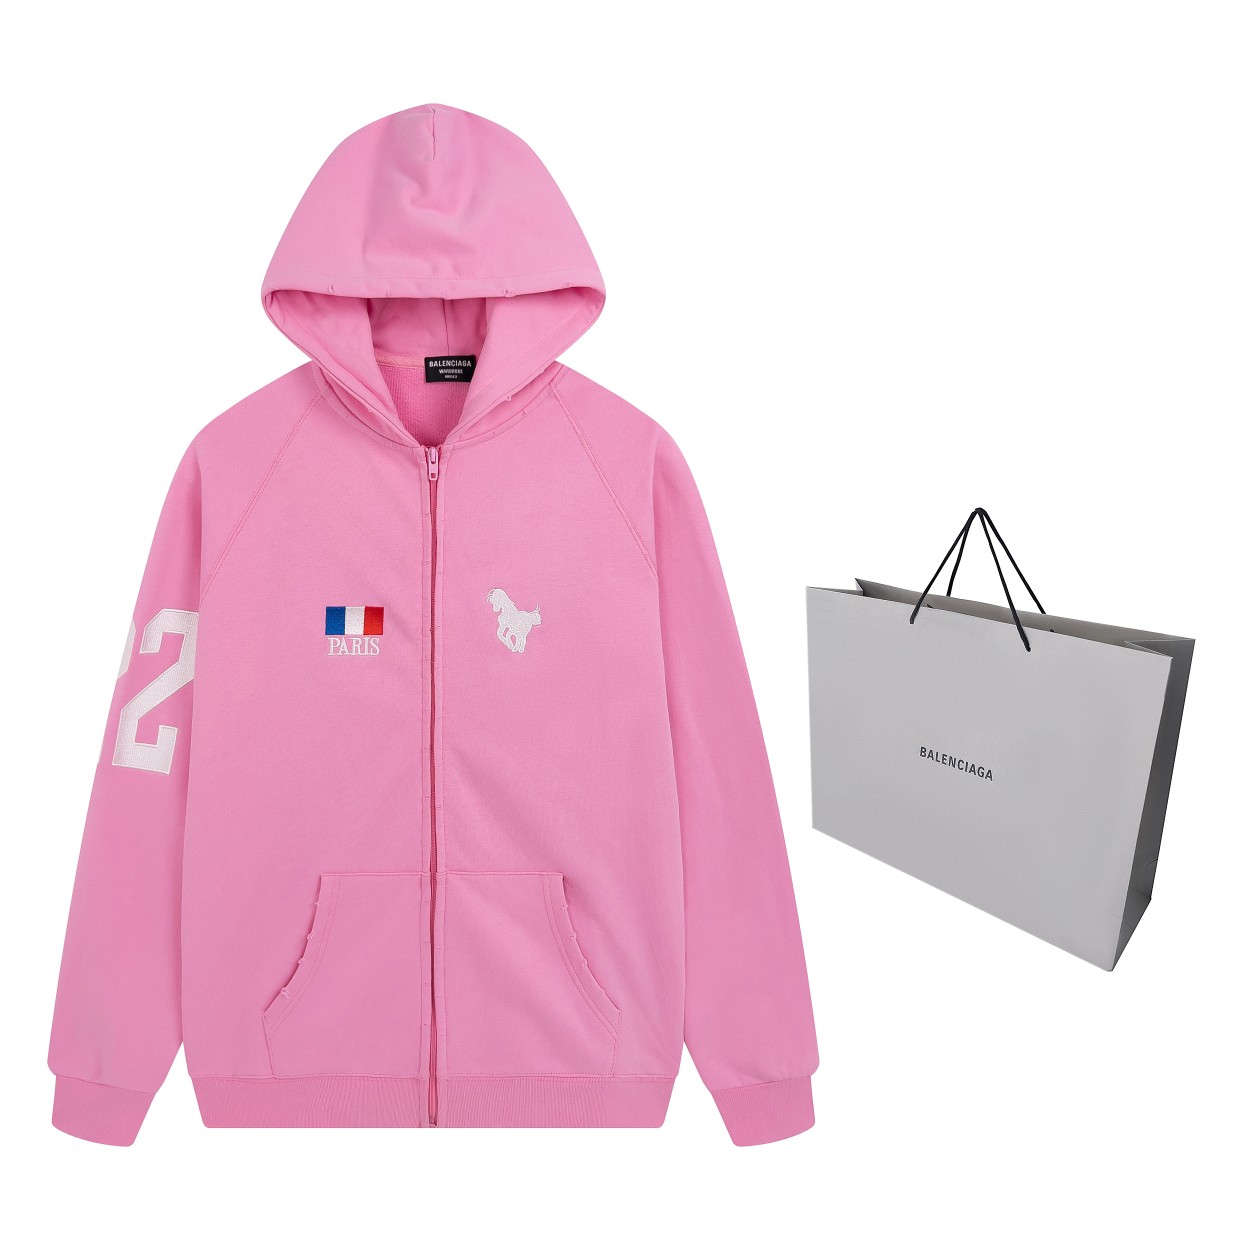 Balenciaga Clothing Coats & Jackets Polo Pink Embroidery Unisex Cotton Fall/Winter Collection BL229070